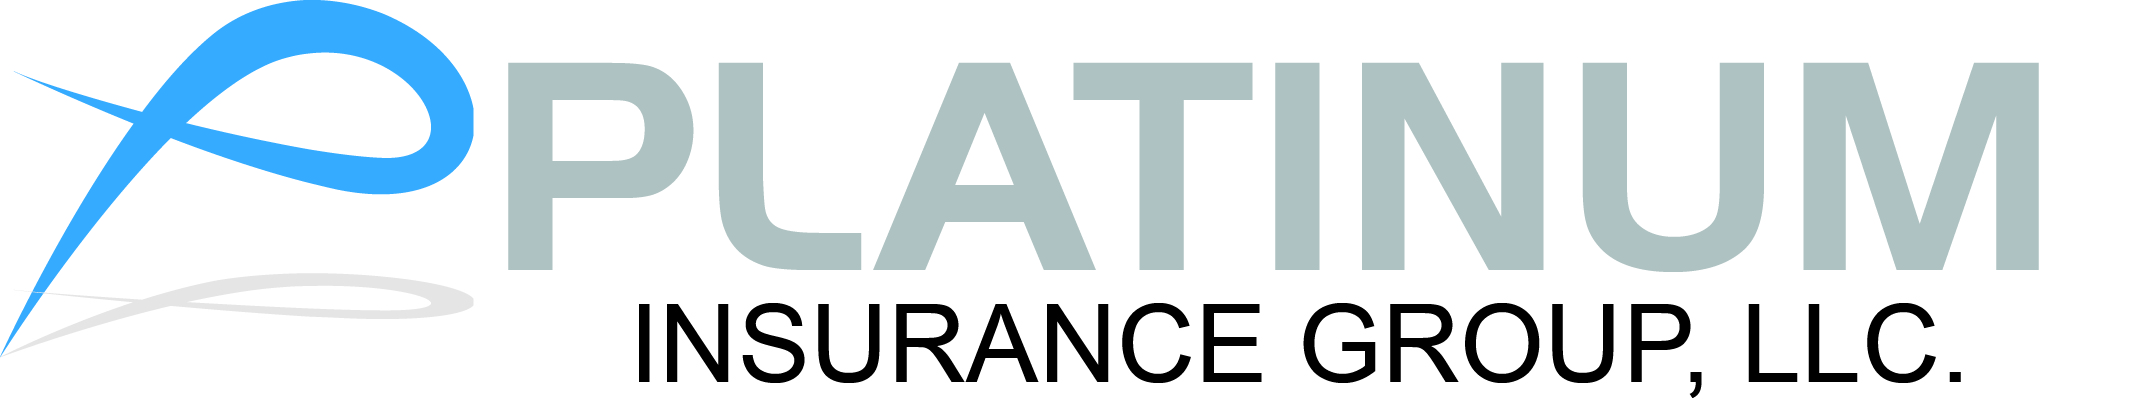 Platinum Insurance Group, LLC